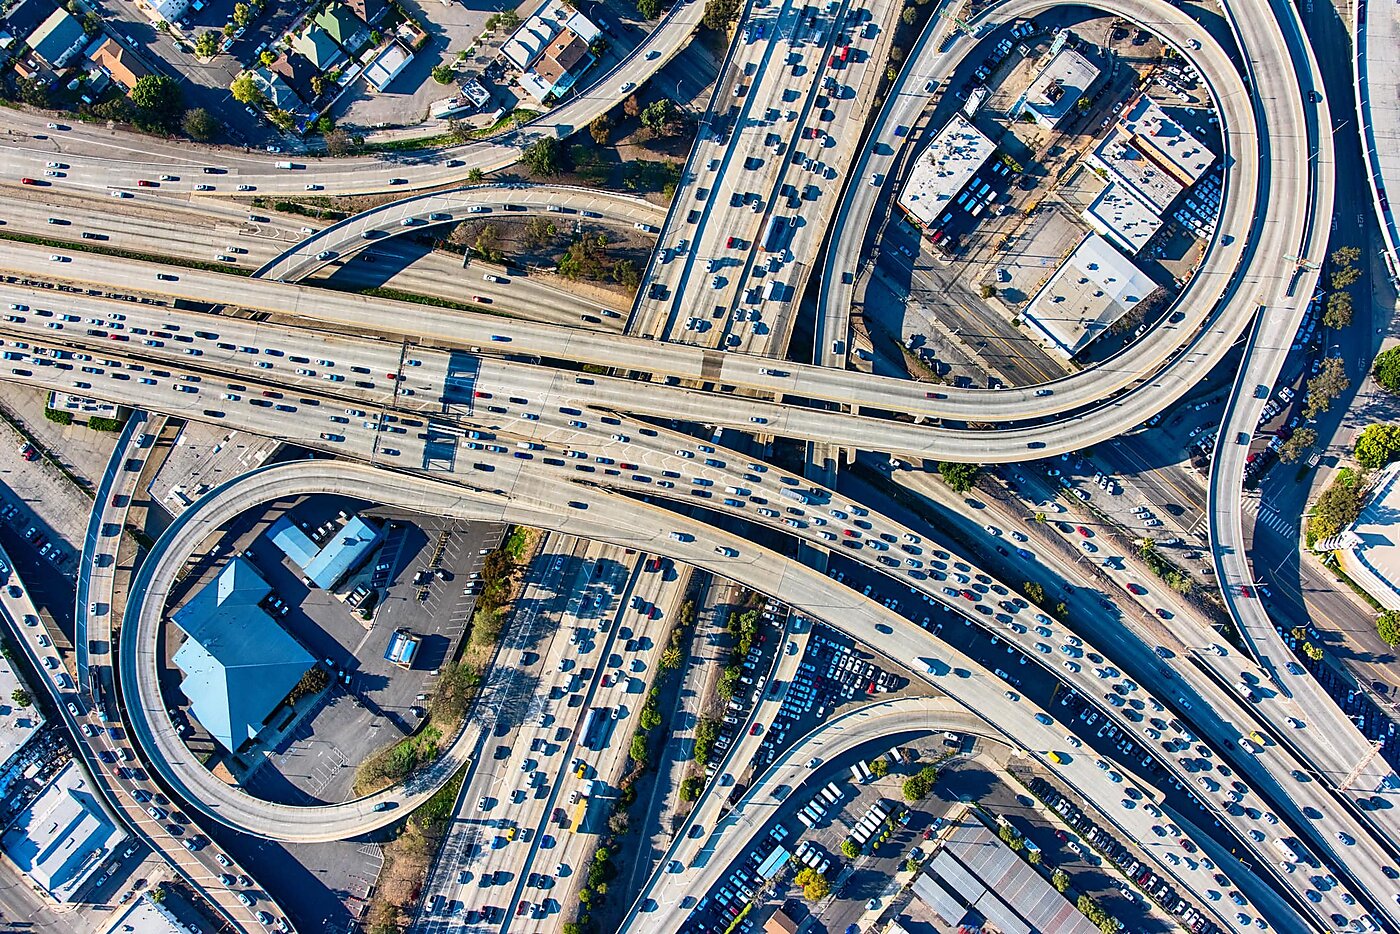 Busy Los Angeles highway interchange